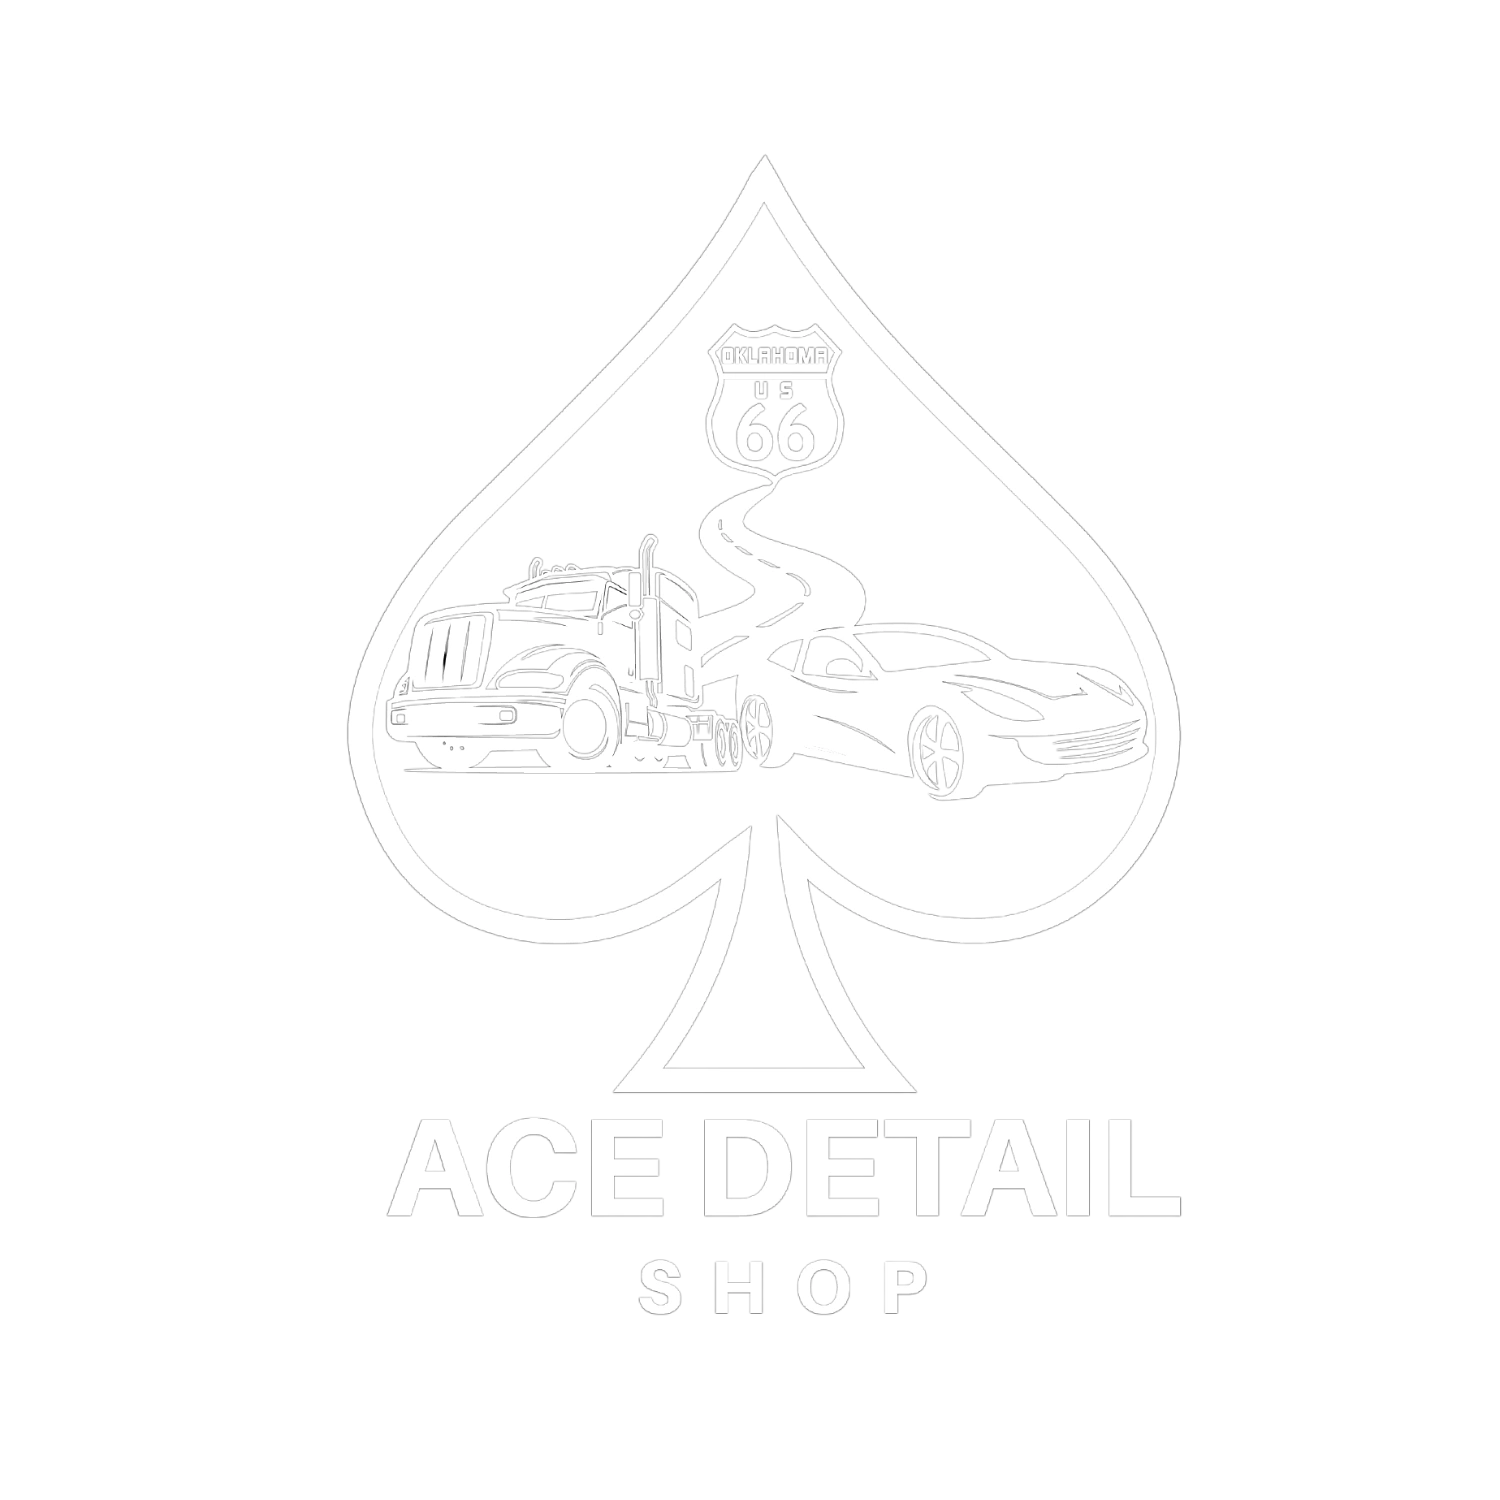 Ace Detail Shop in Warr Acres. Oklahoma City Metro Area.